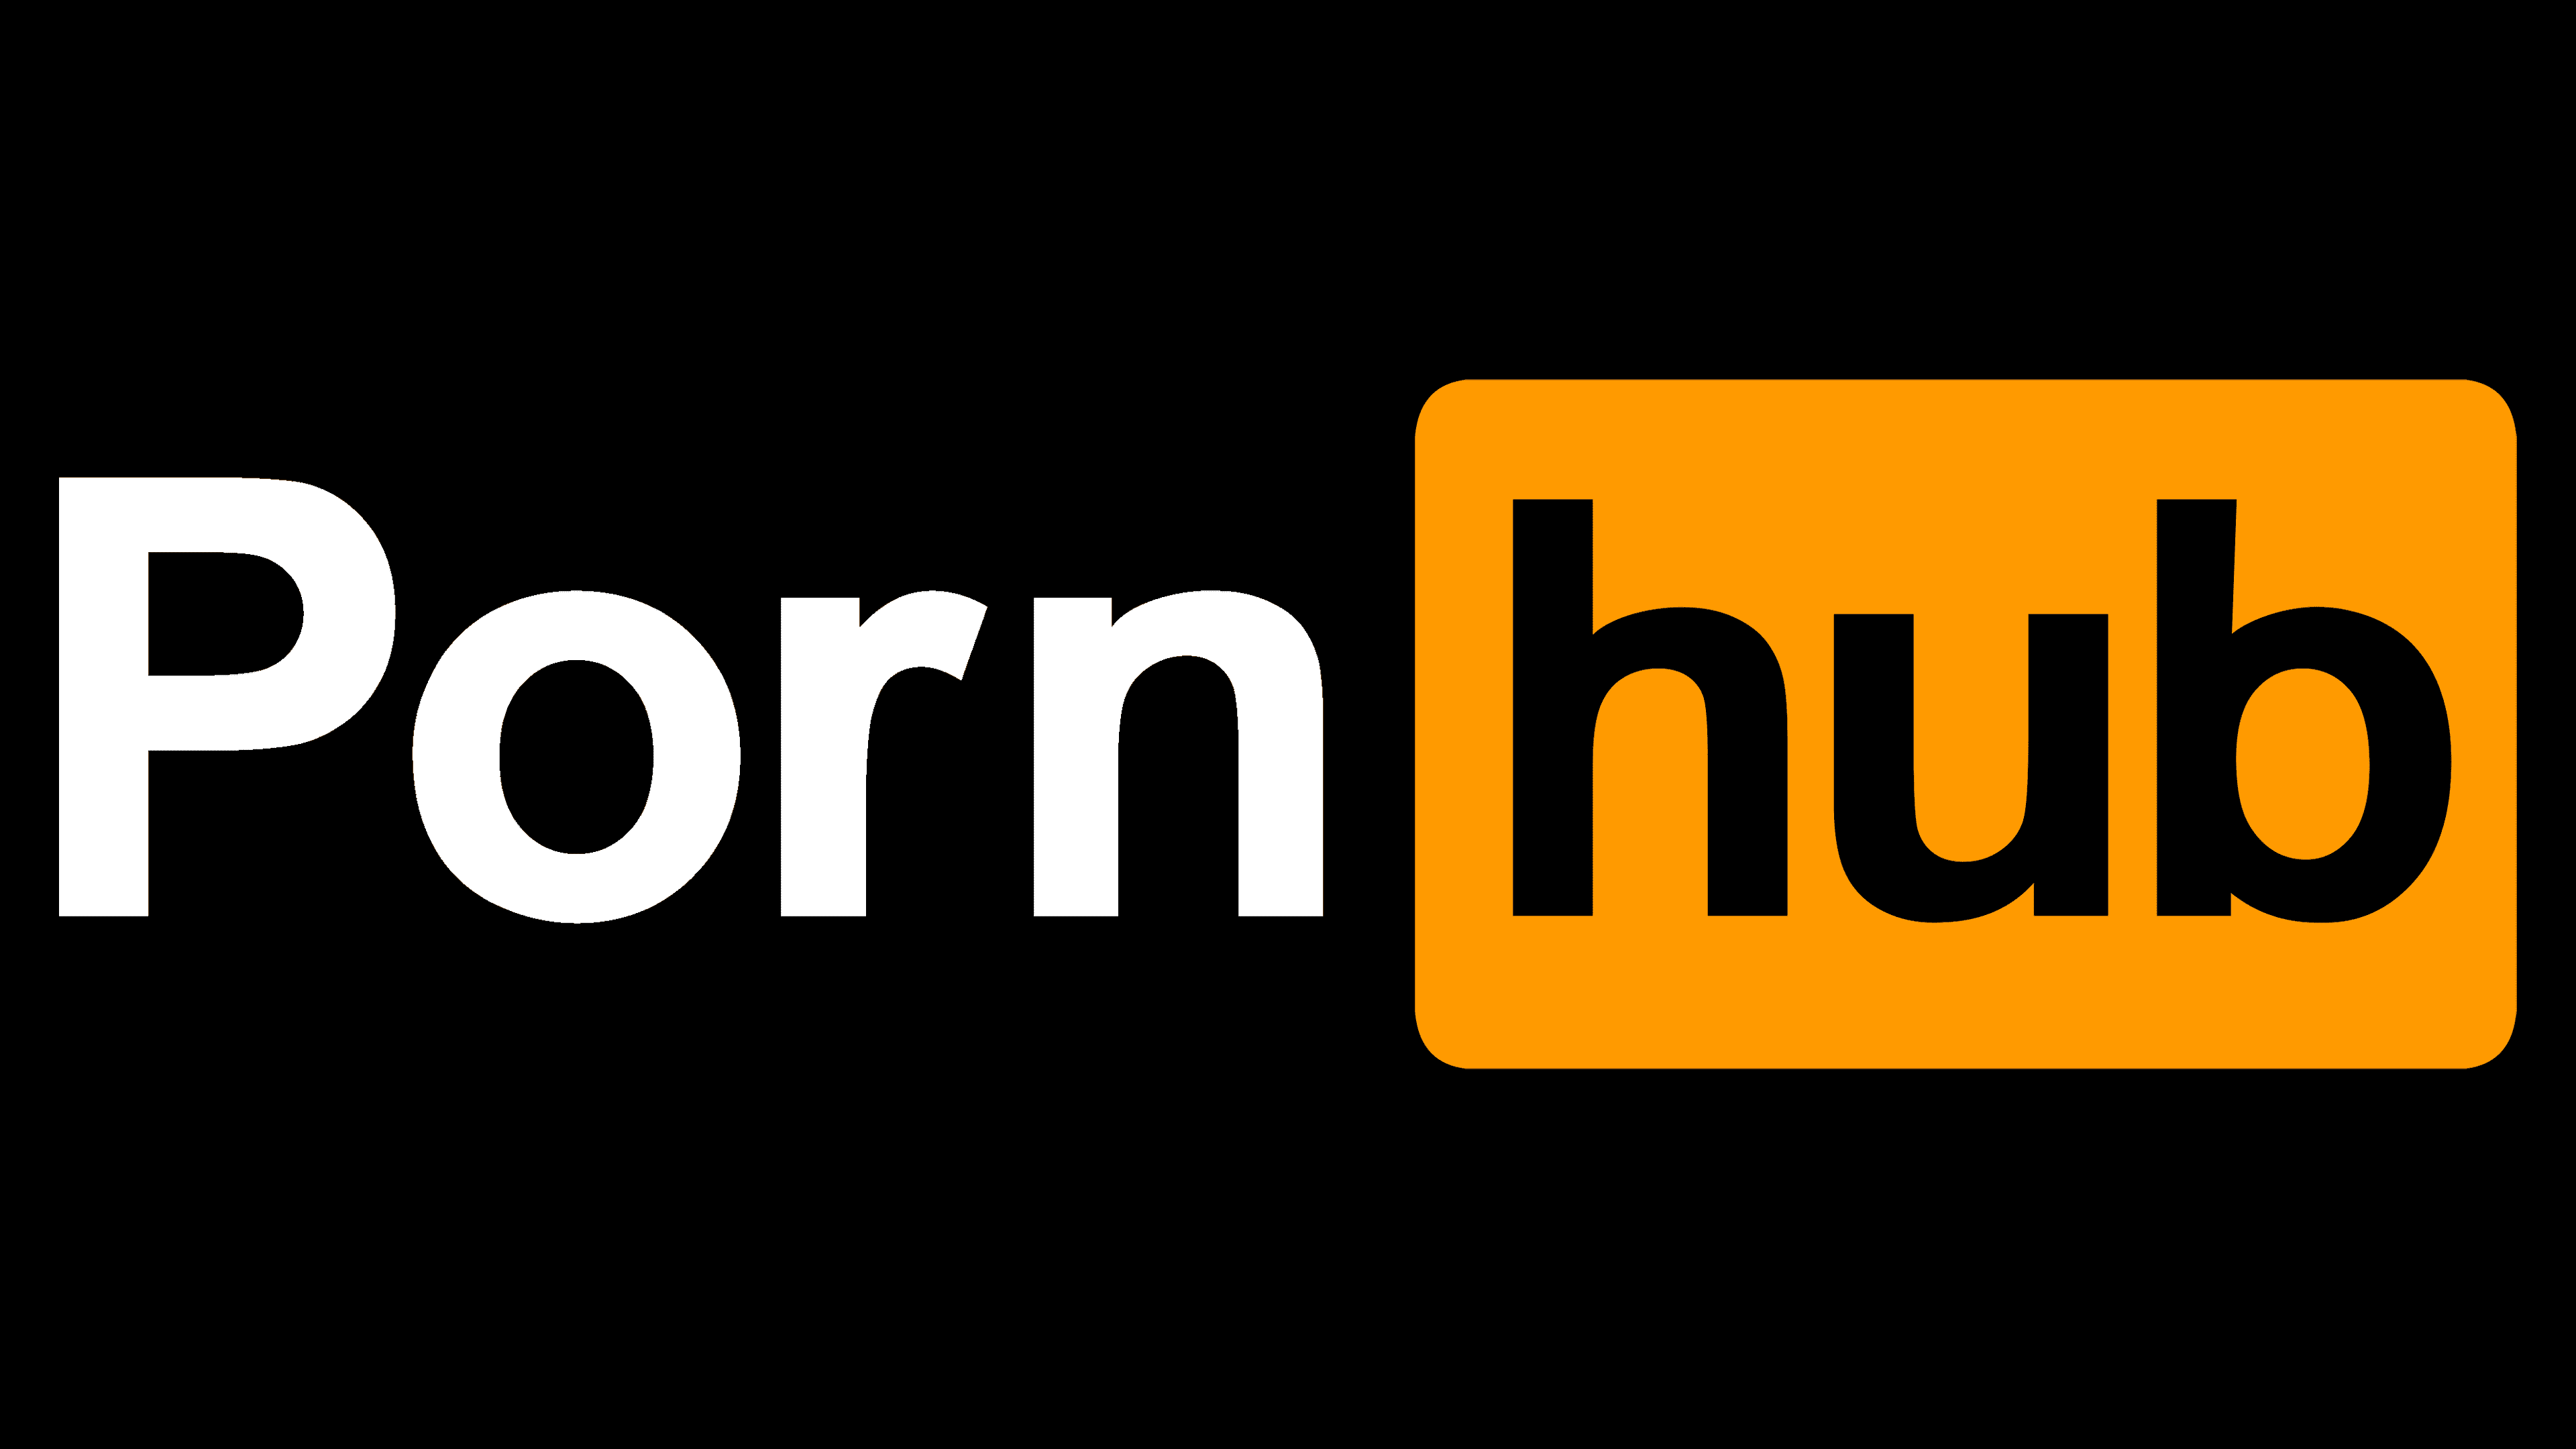 Download For Porn Hub Pornhub Logo, symbol, meaning, history, PNG, brand